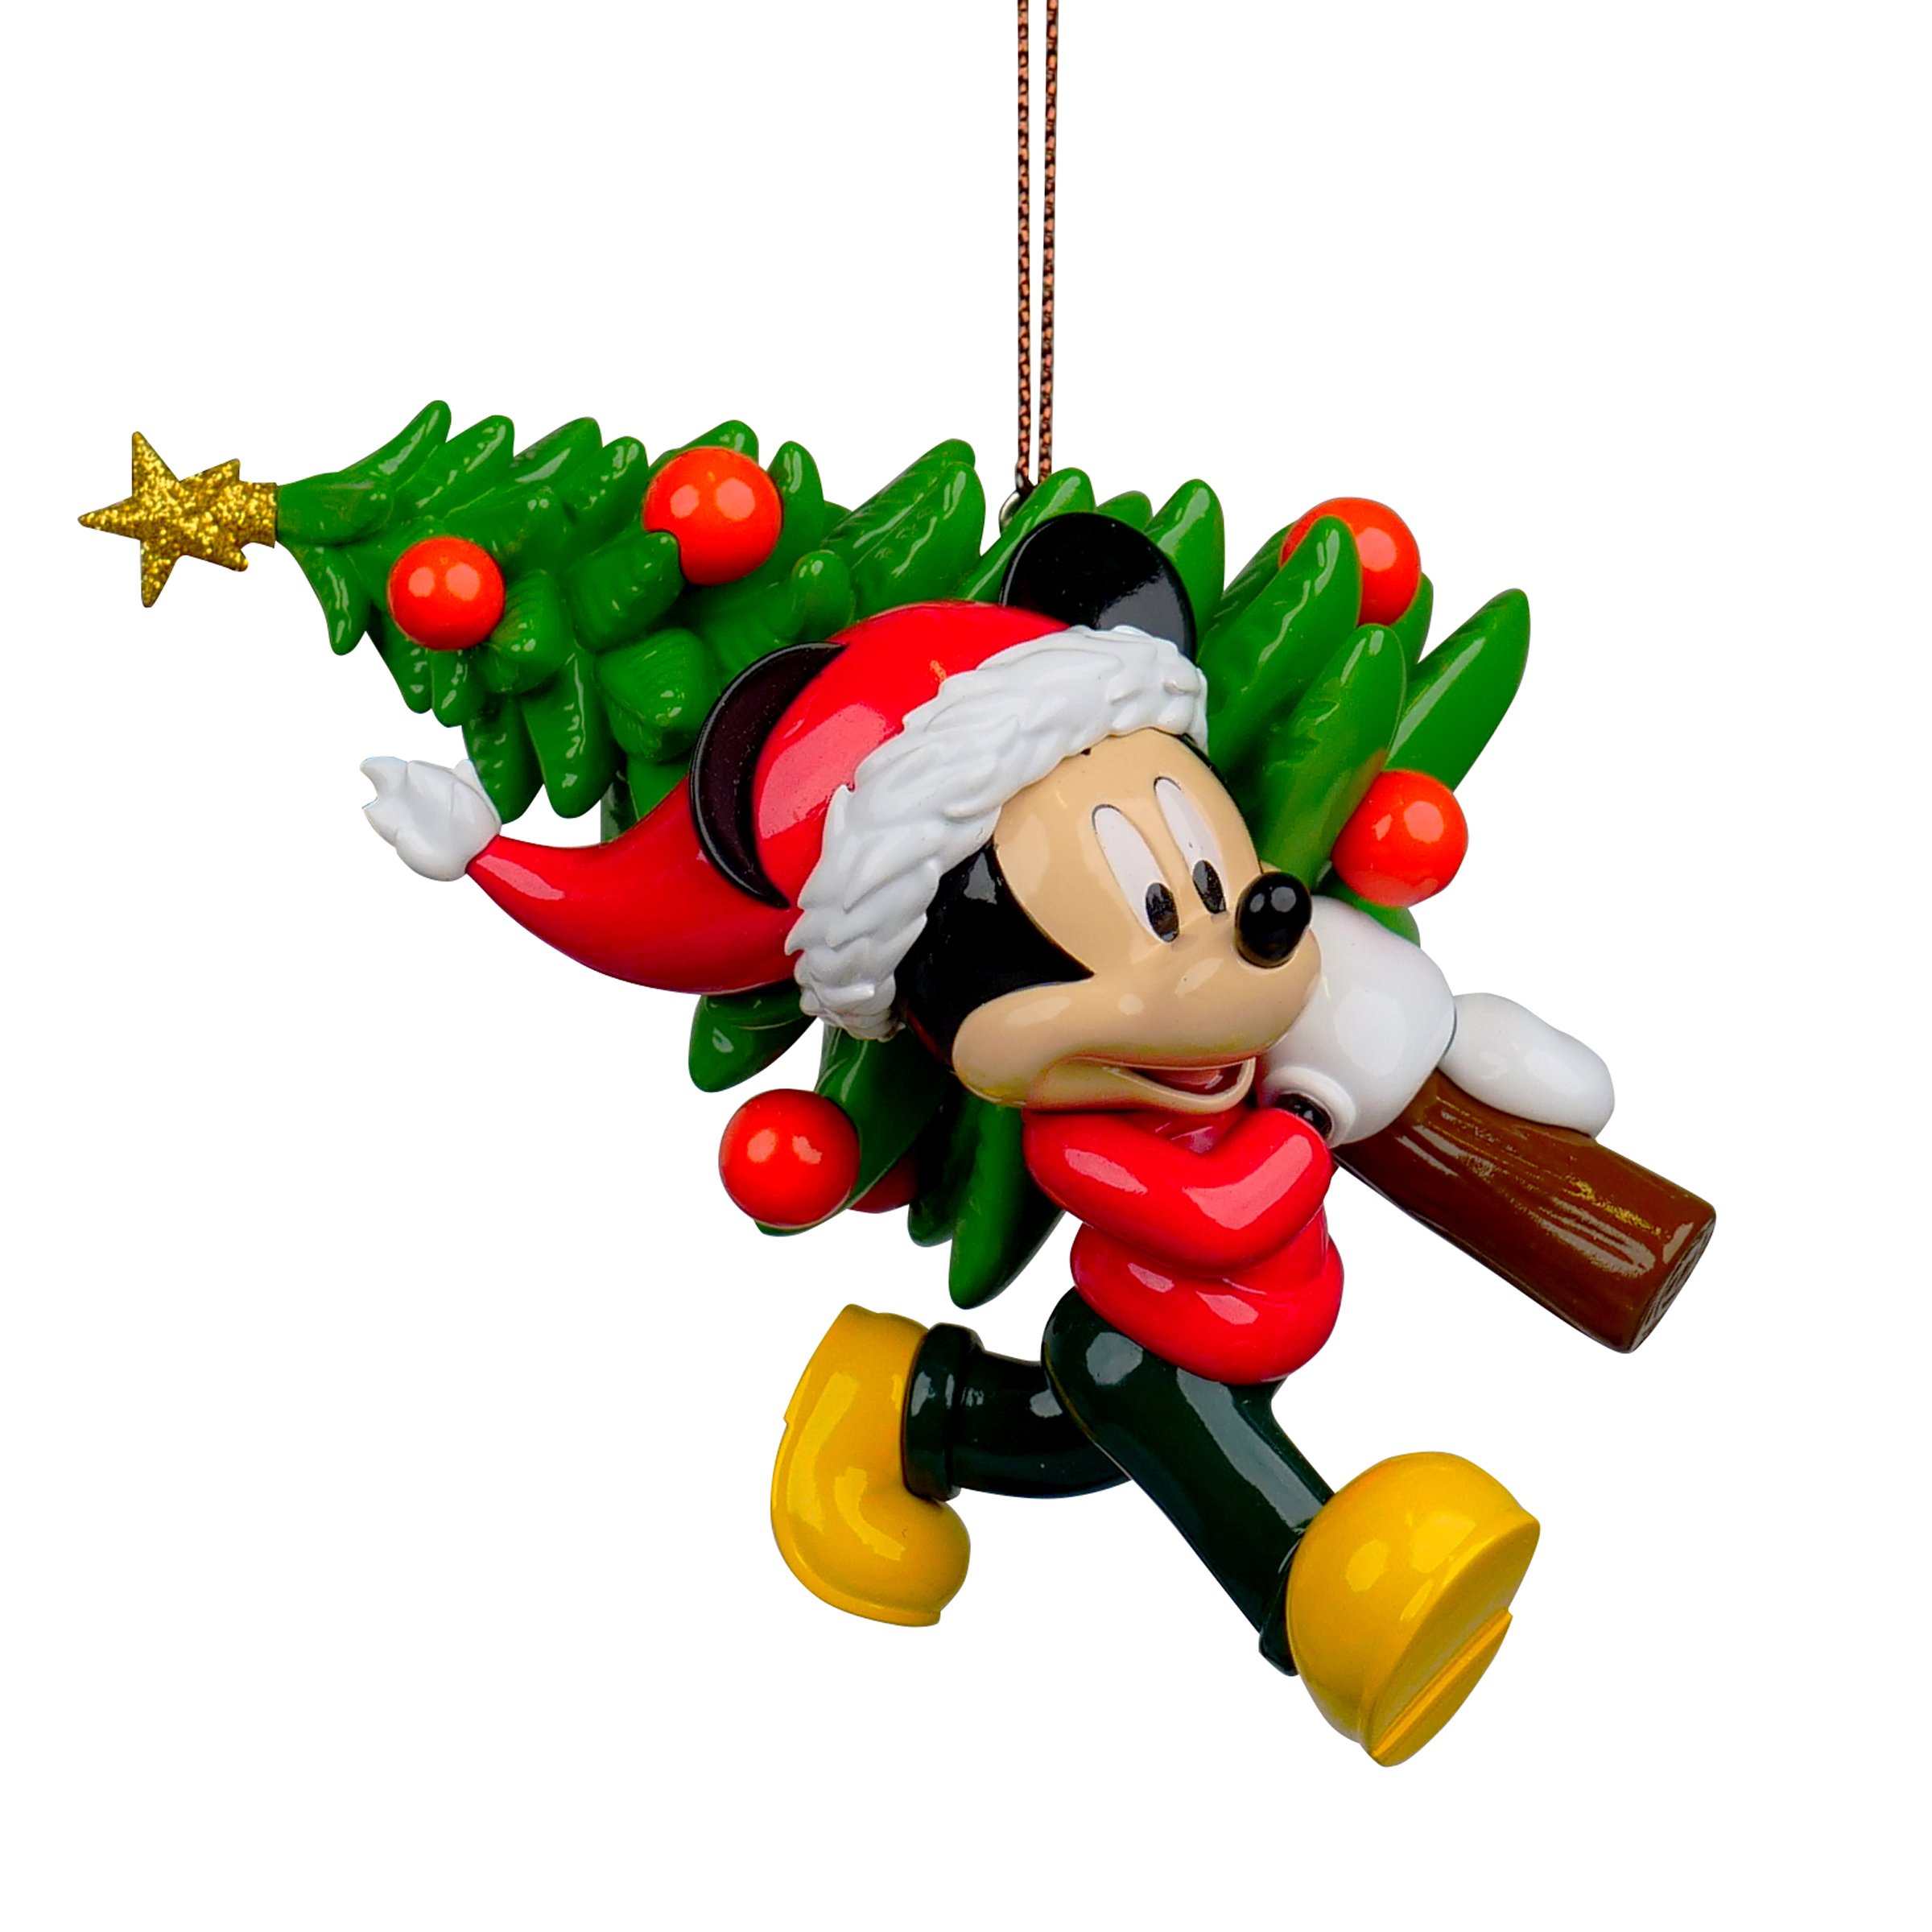 Corona Navidad Disney  Corona guirnaldas icono Mickey Mouse